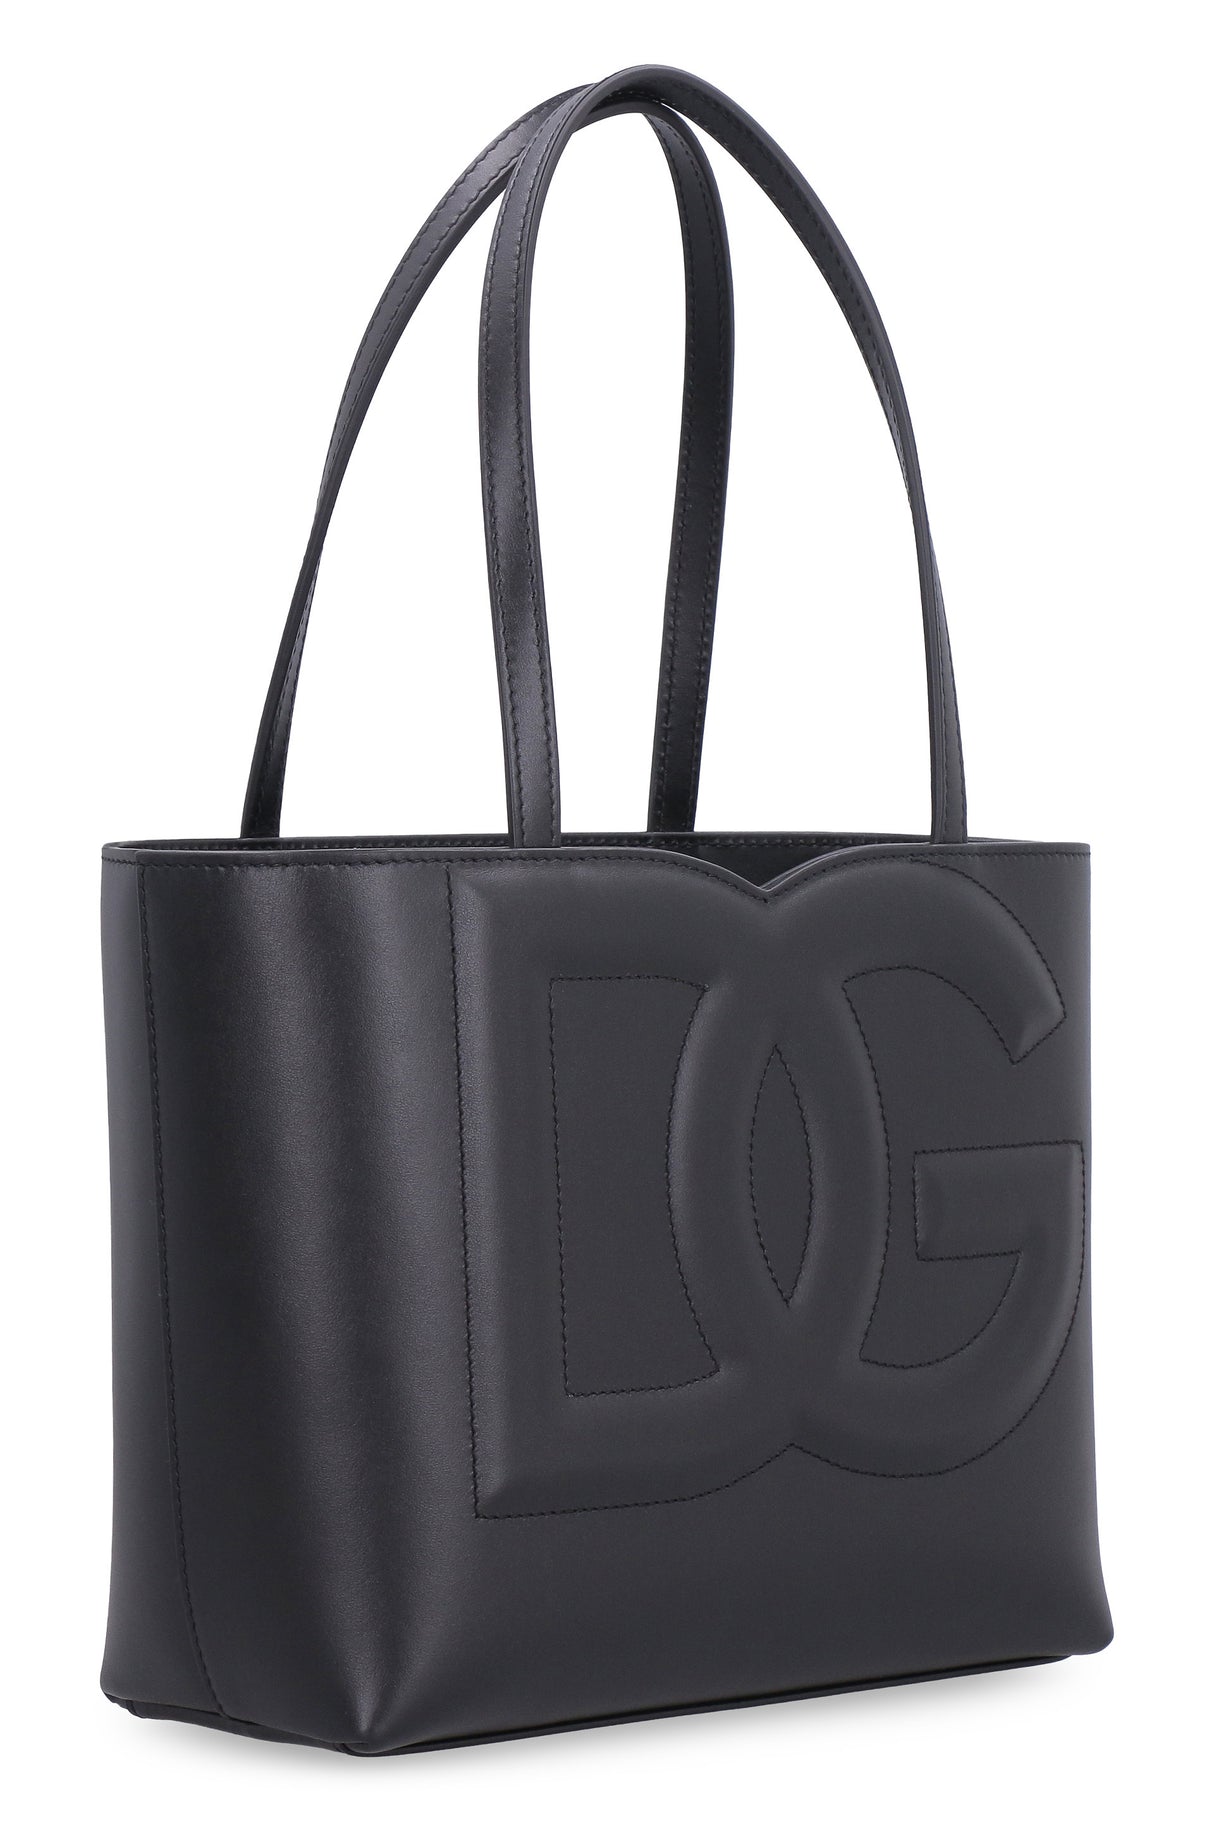 DOLCE & GABBANA Black Logo Tote Handbag for Women - Carryover Collection